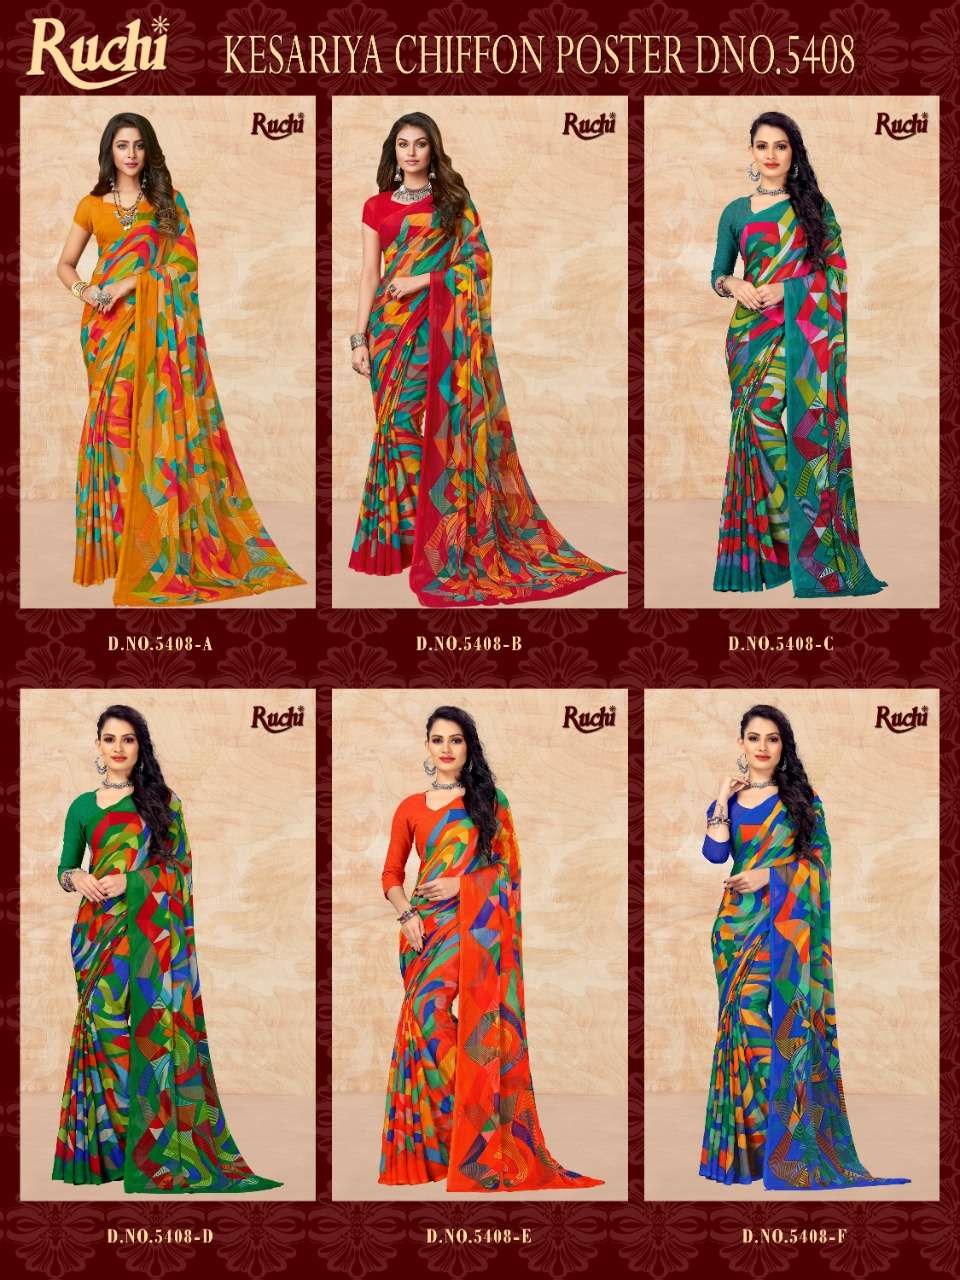 Ruchi Saree Kesariya Chiffon 5408 Colors 